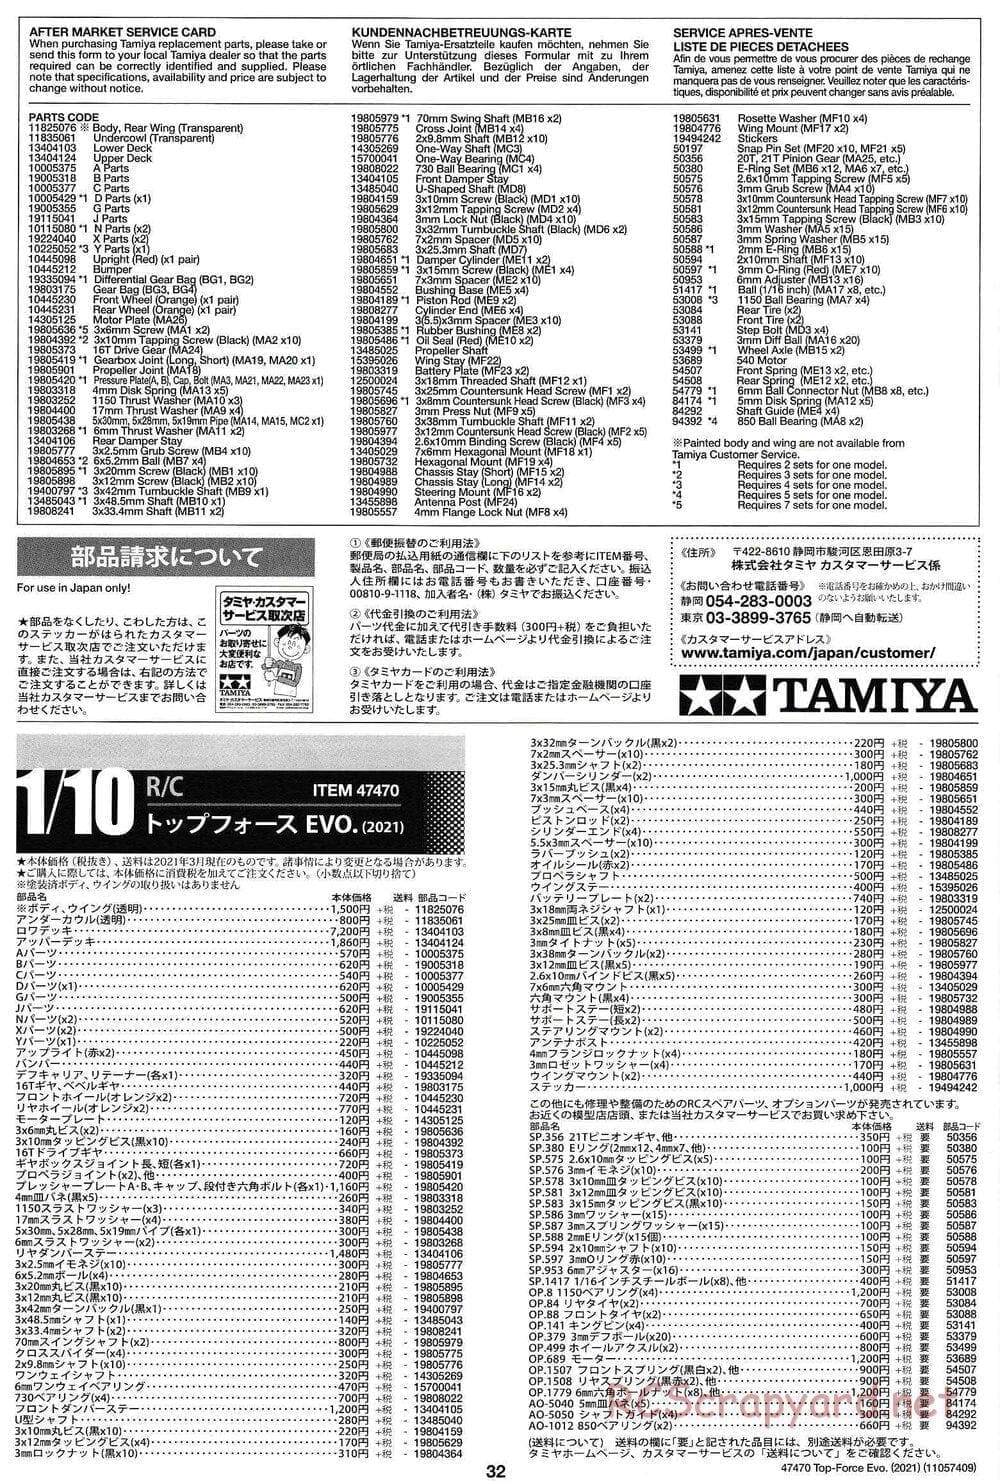 Tamiya - Top Force Evo 2021 - DF-01 Chassis - Manual - Page 32